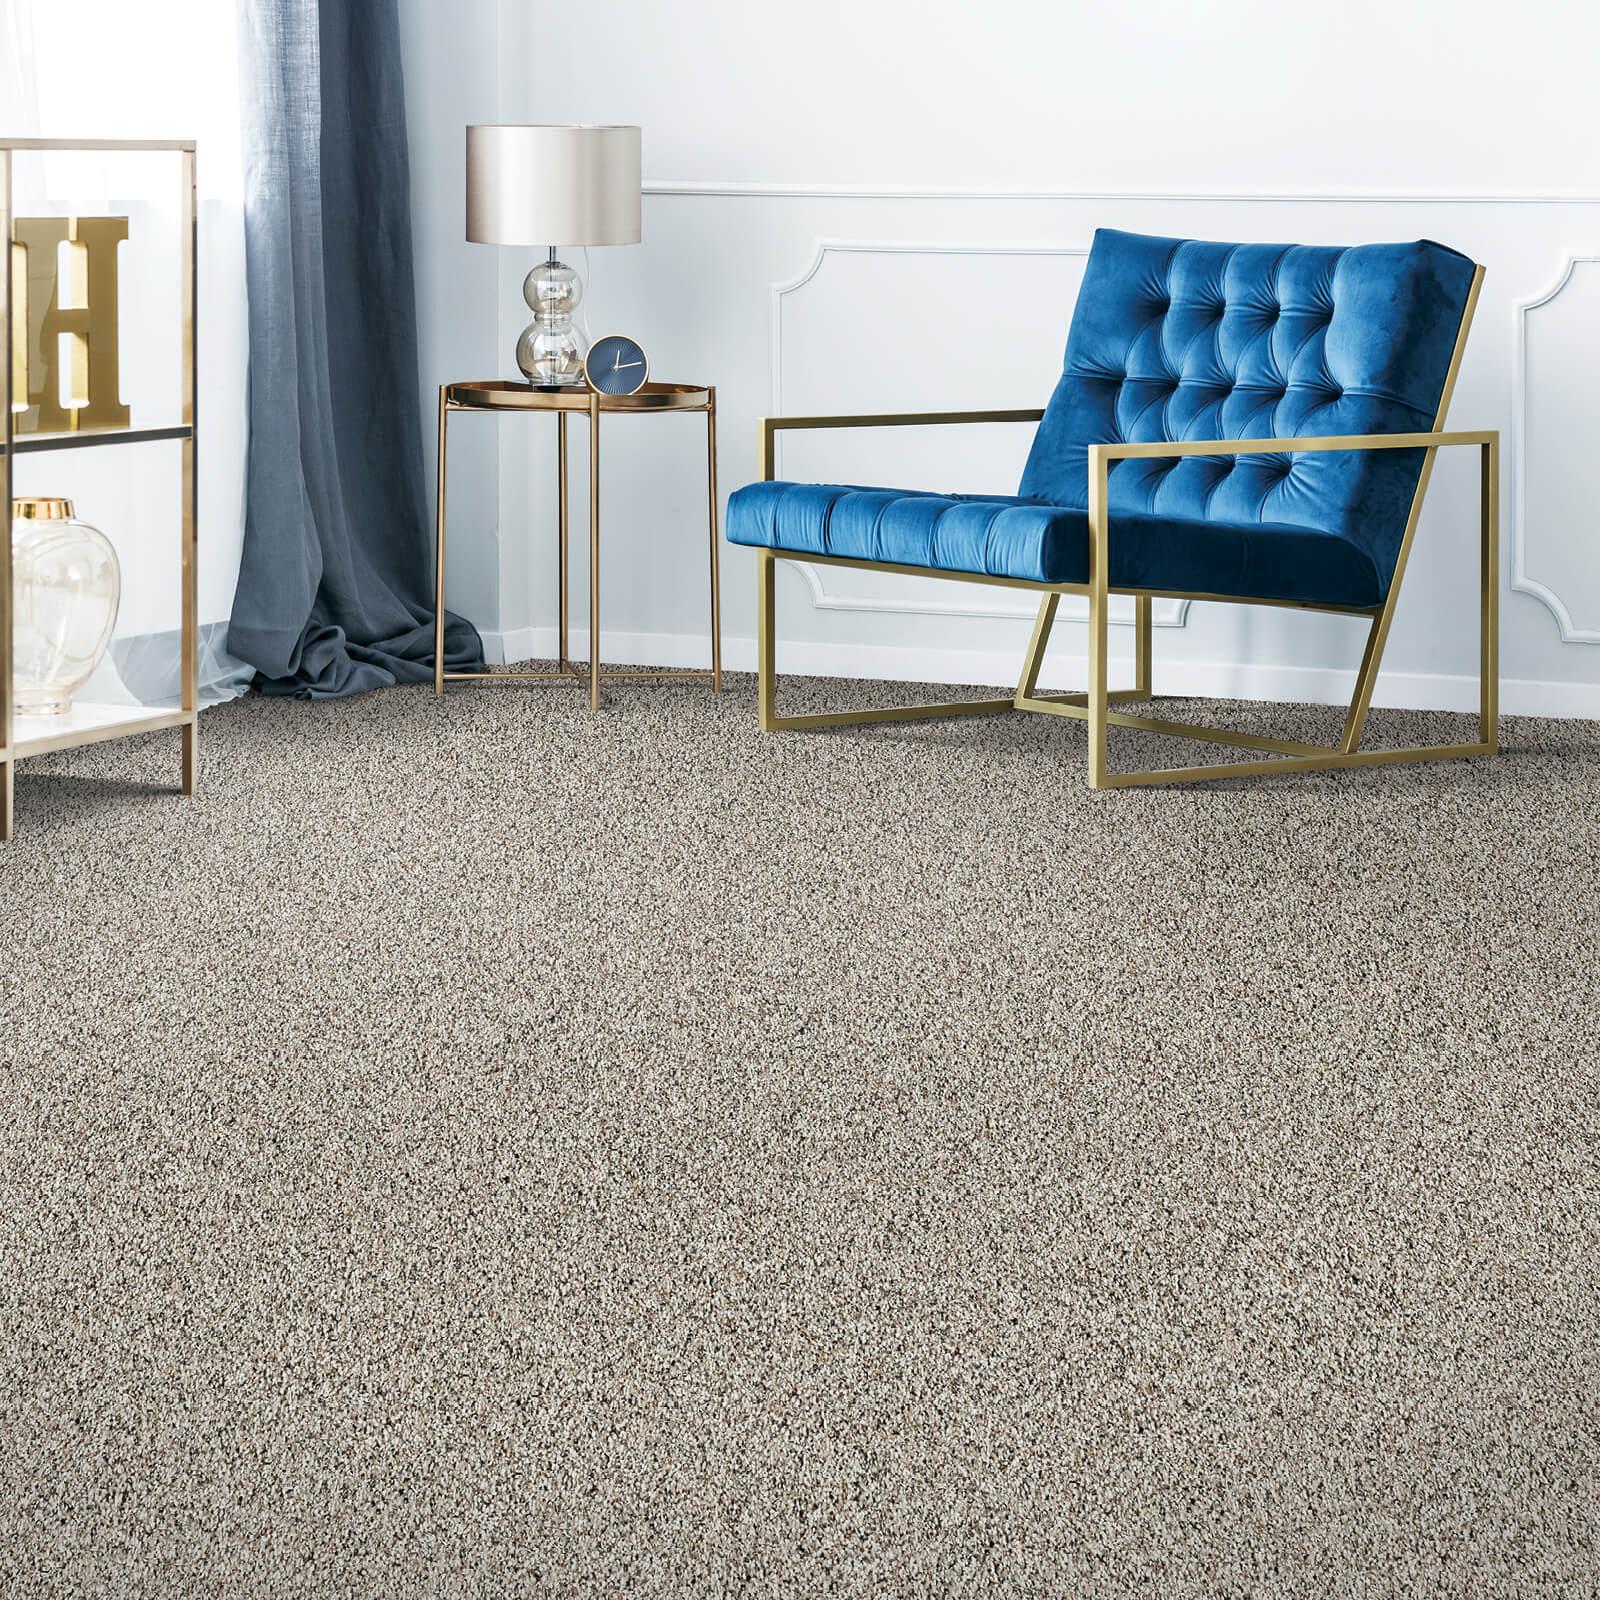 choose-carpet-for-allergies | Location Carpet And Flooring